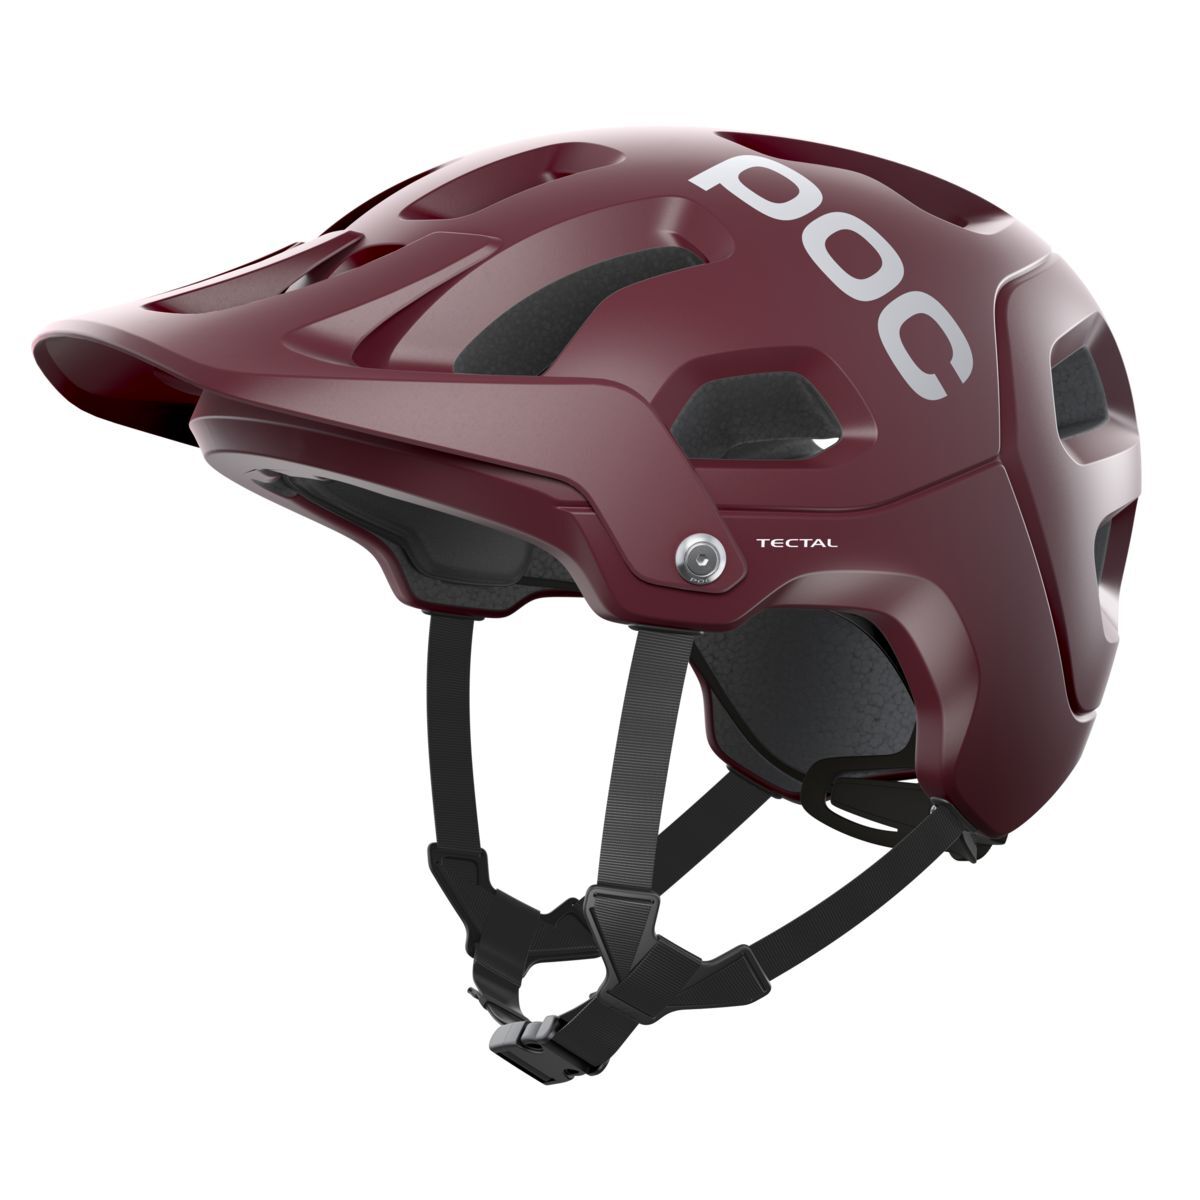 Poc Tectal - Mountain bike Helmet